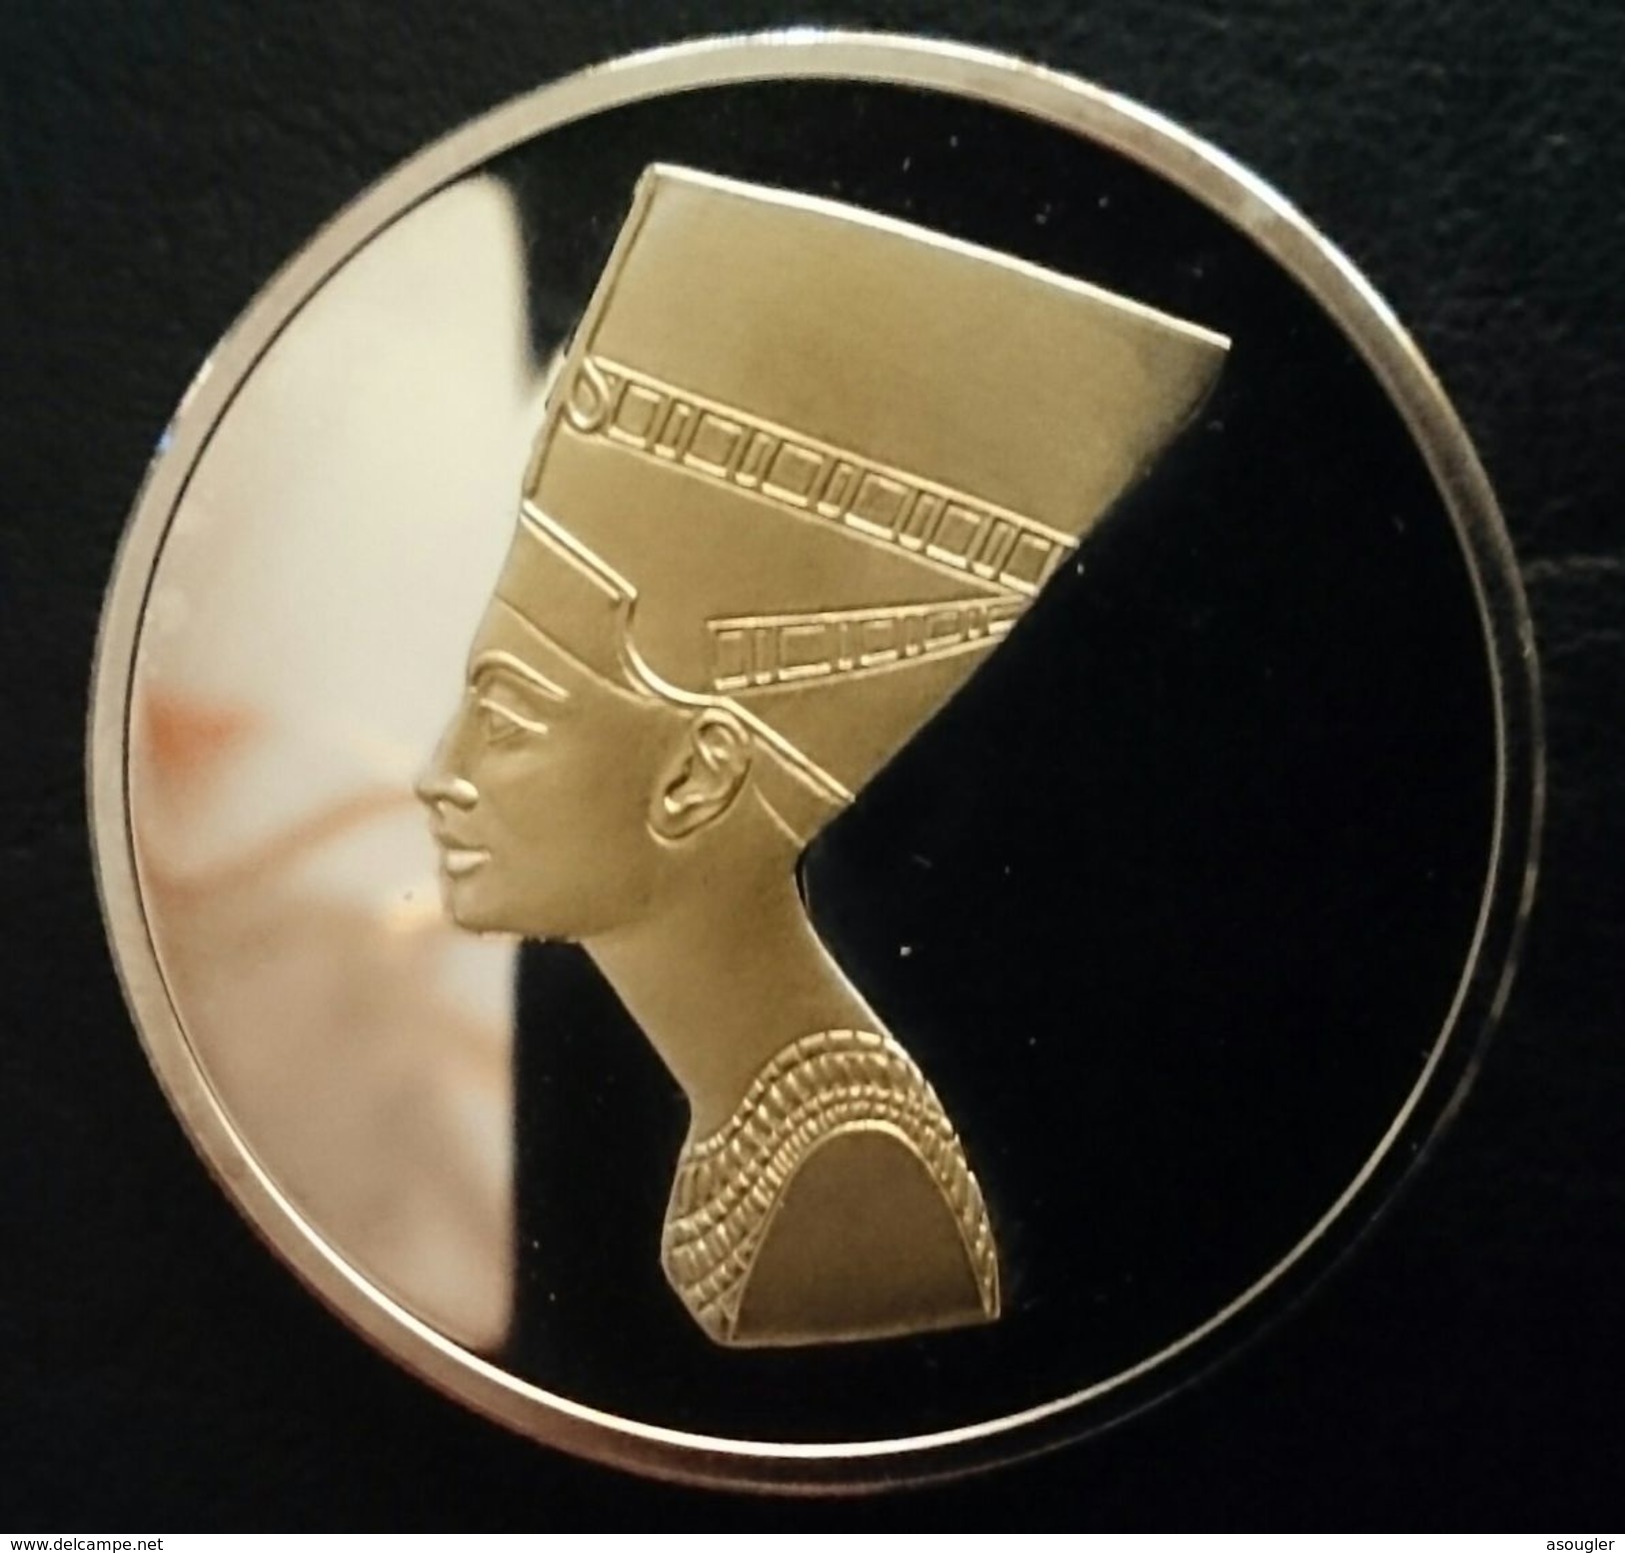 CAMBODIA 3000 Riels 2006 Silver & Gold PROOF "Queen Nefertiti" Free Shipping Via Registered Air Mail - Cambodia